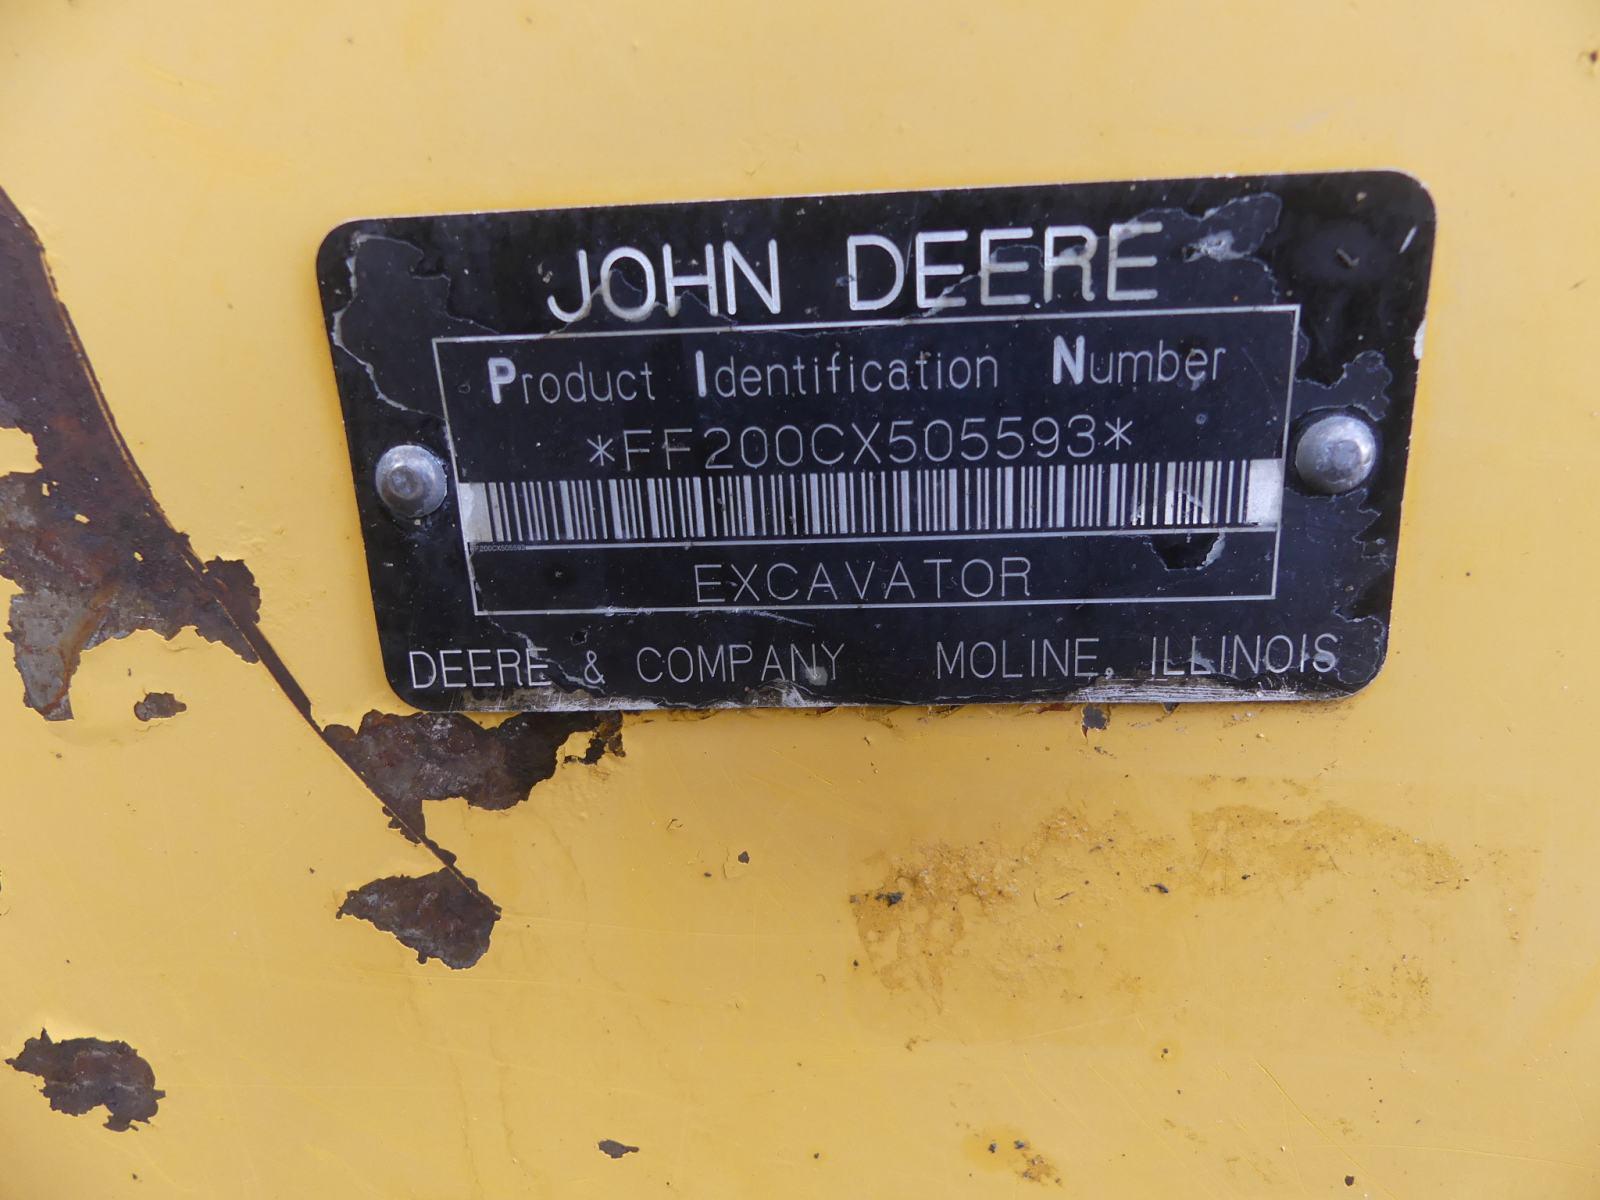 John Deere 200CLC Excavator, s/n FF200CX505593